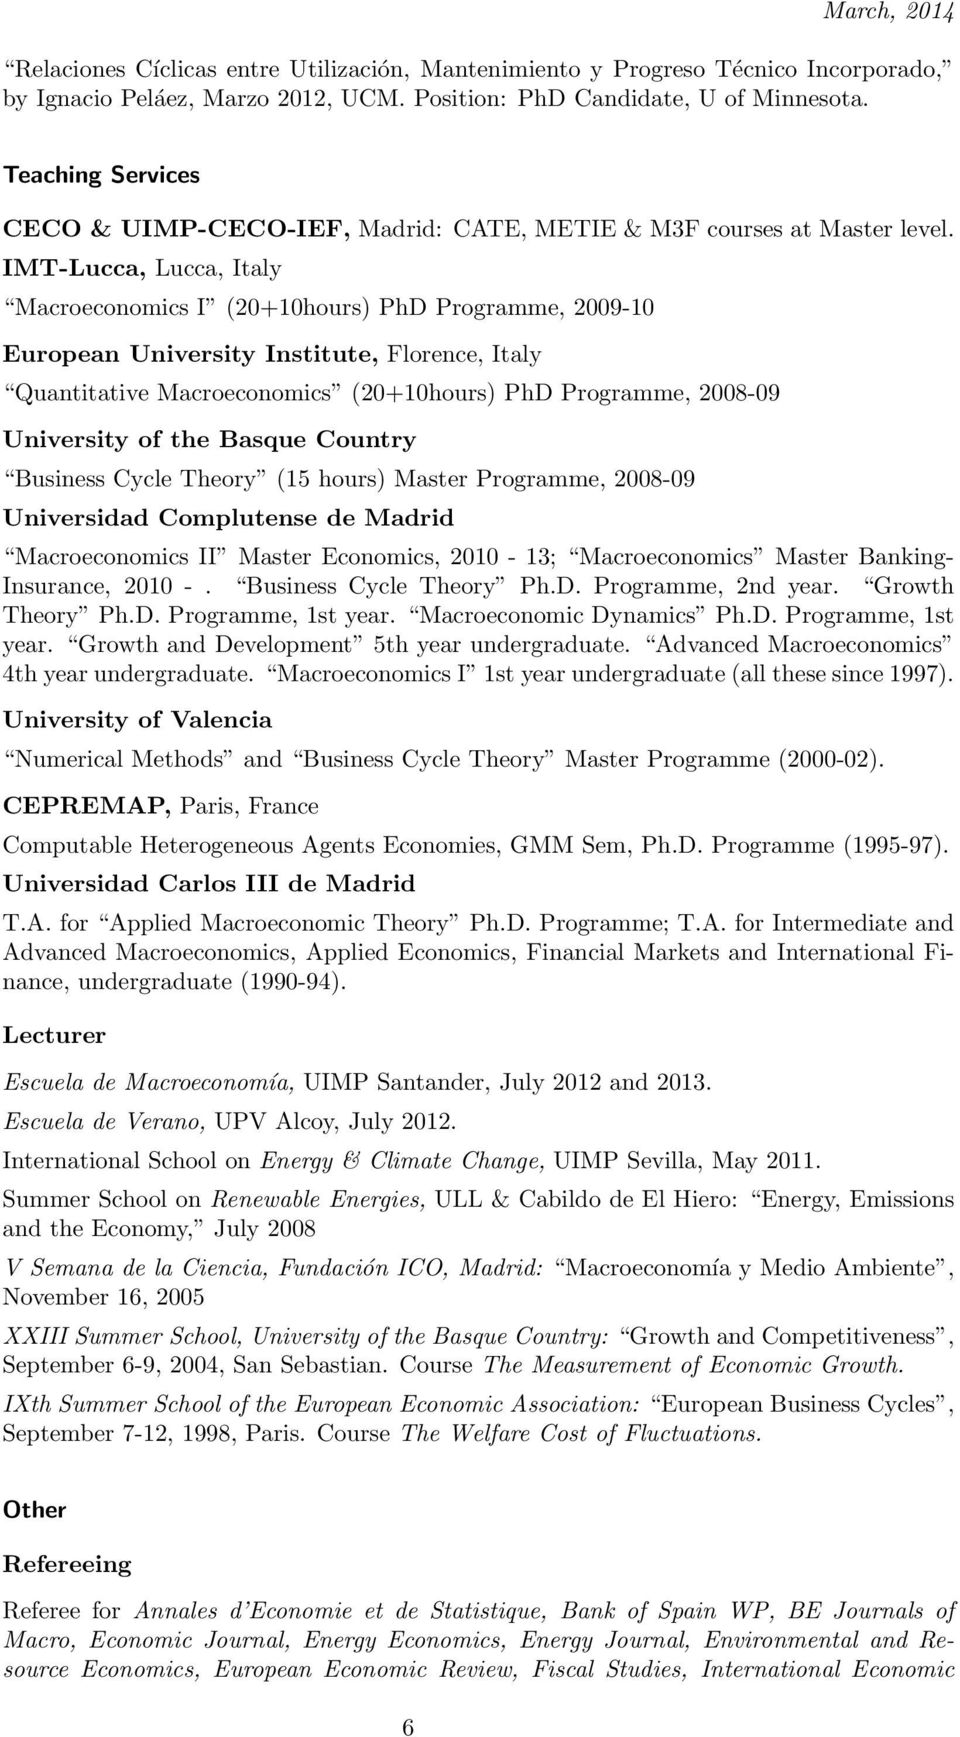 IMT-Lucca, Lucca, Italy Macroeconomics I (20+10hours) PhD Programme, 2009-10 European University Institute, Florence, Italy Quantitative Macroeconomics (20+10hours) PhD Programme, 2008-09 University